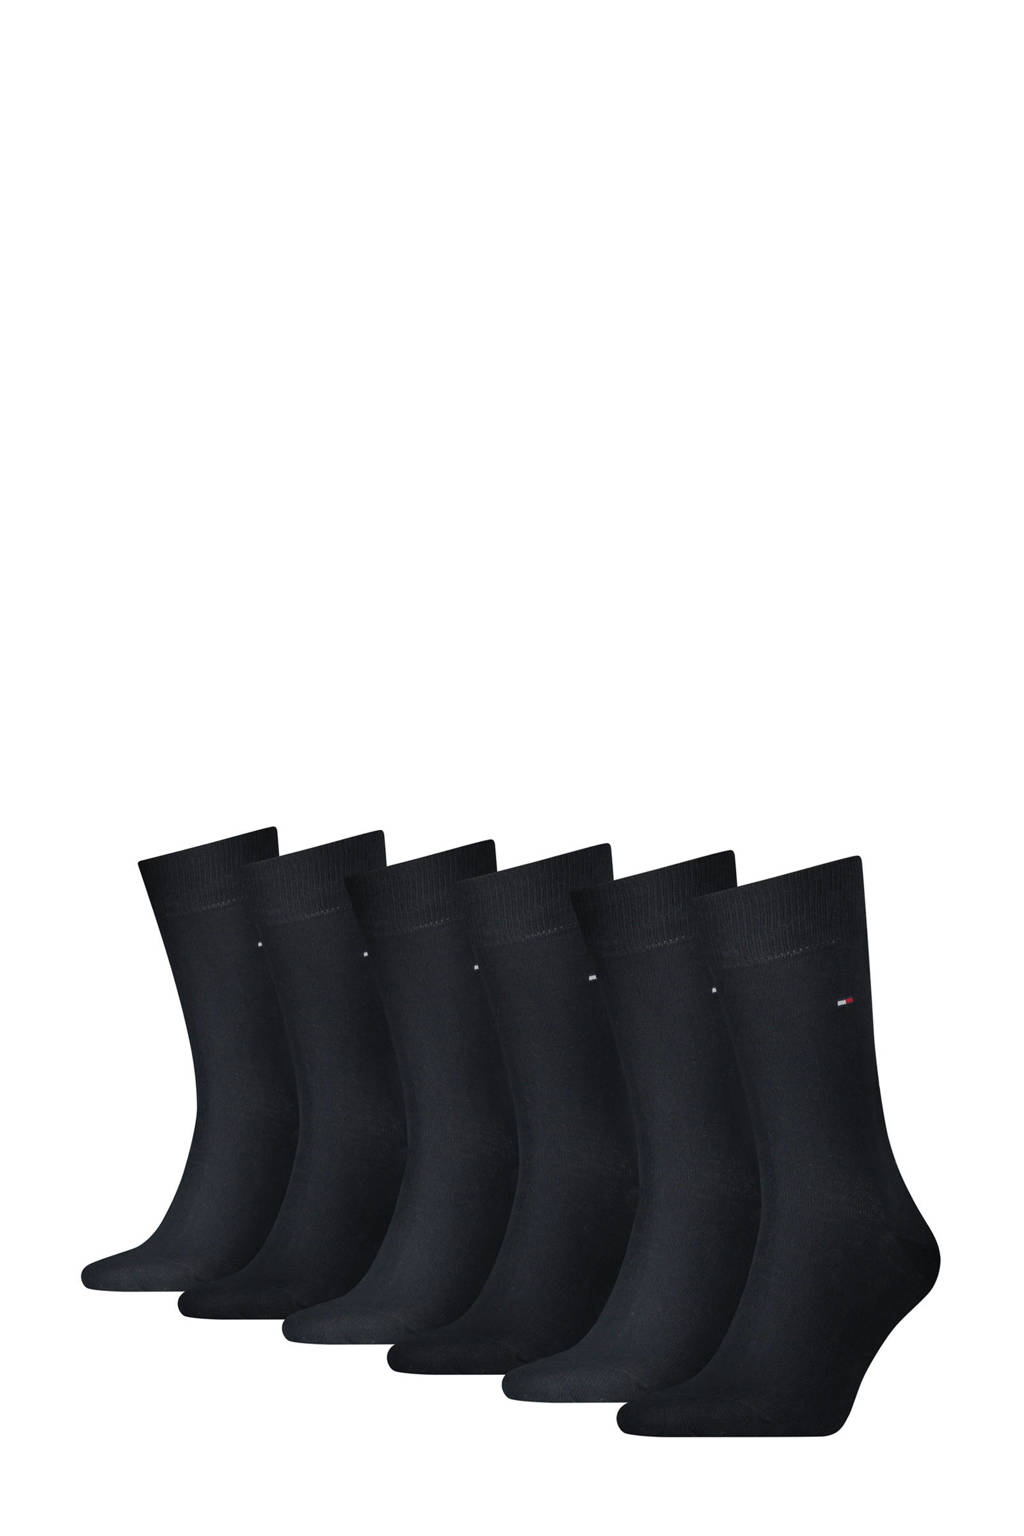 Tommy Hilfiger sokken - set van 6 donkerblauw, Donkerblauw